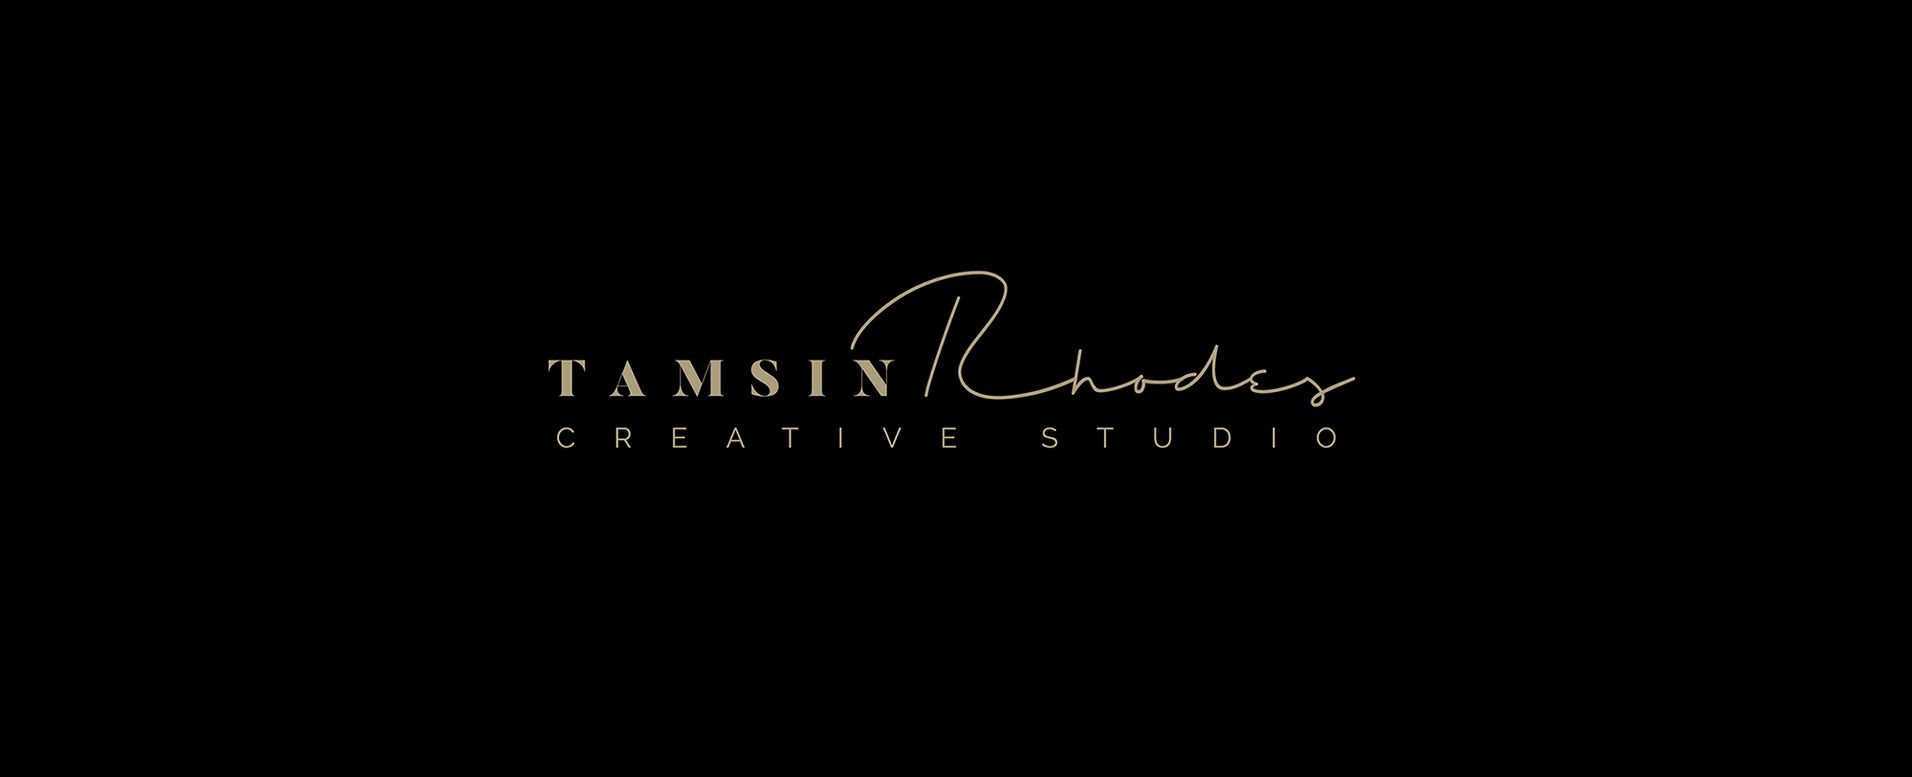 TR Creative Studio Banner image